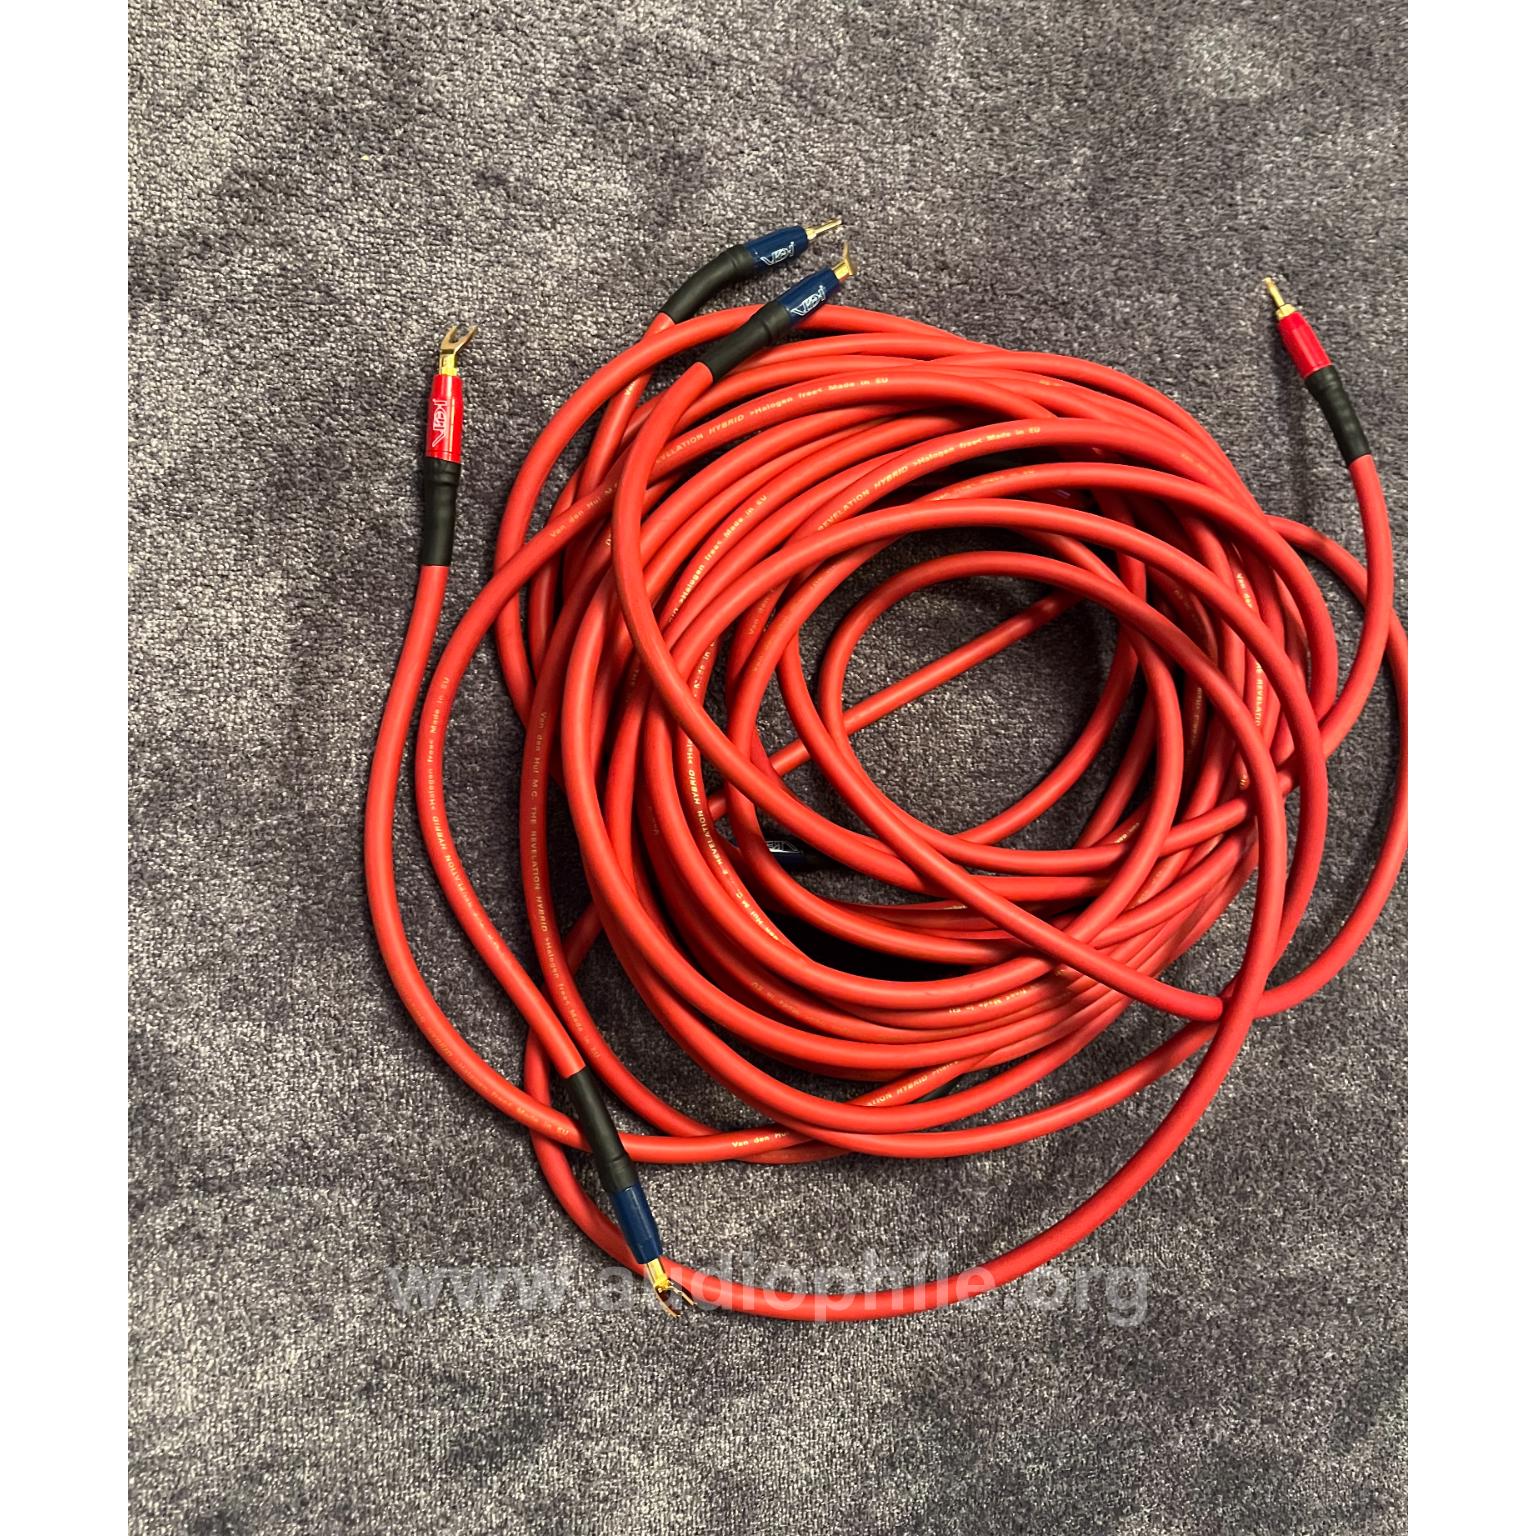 Van den hul - revelation hybrid (single wire) hoparlör kablosu